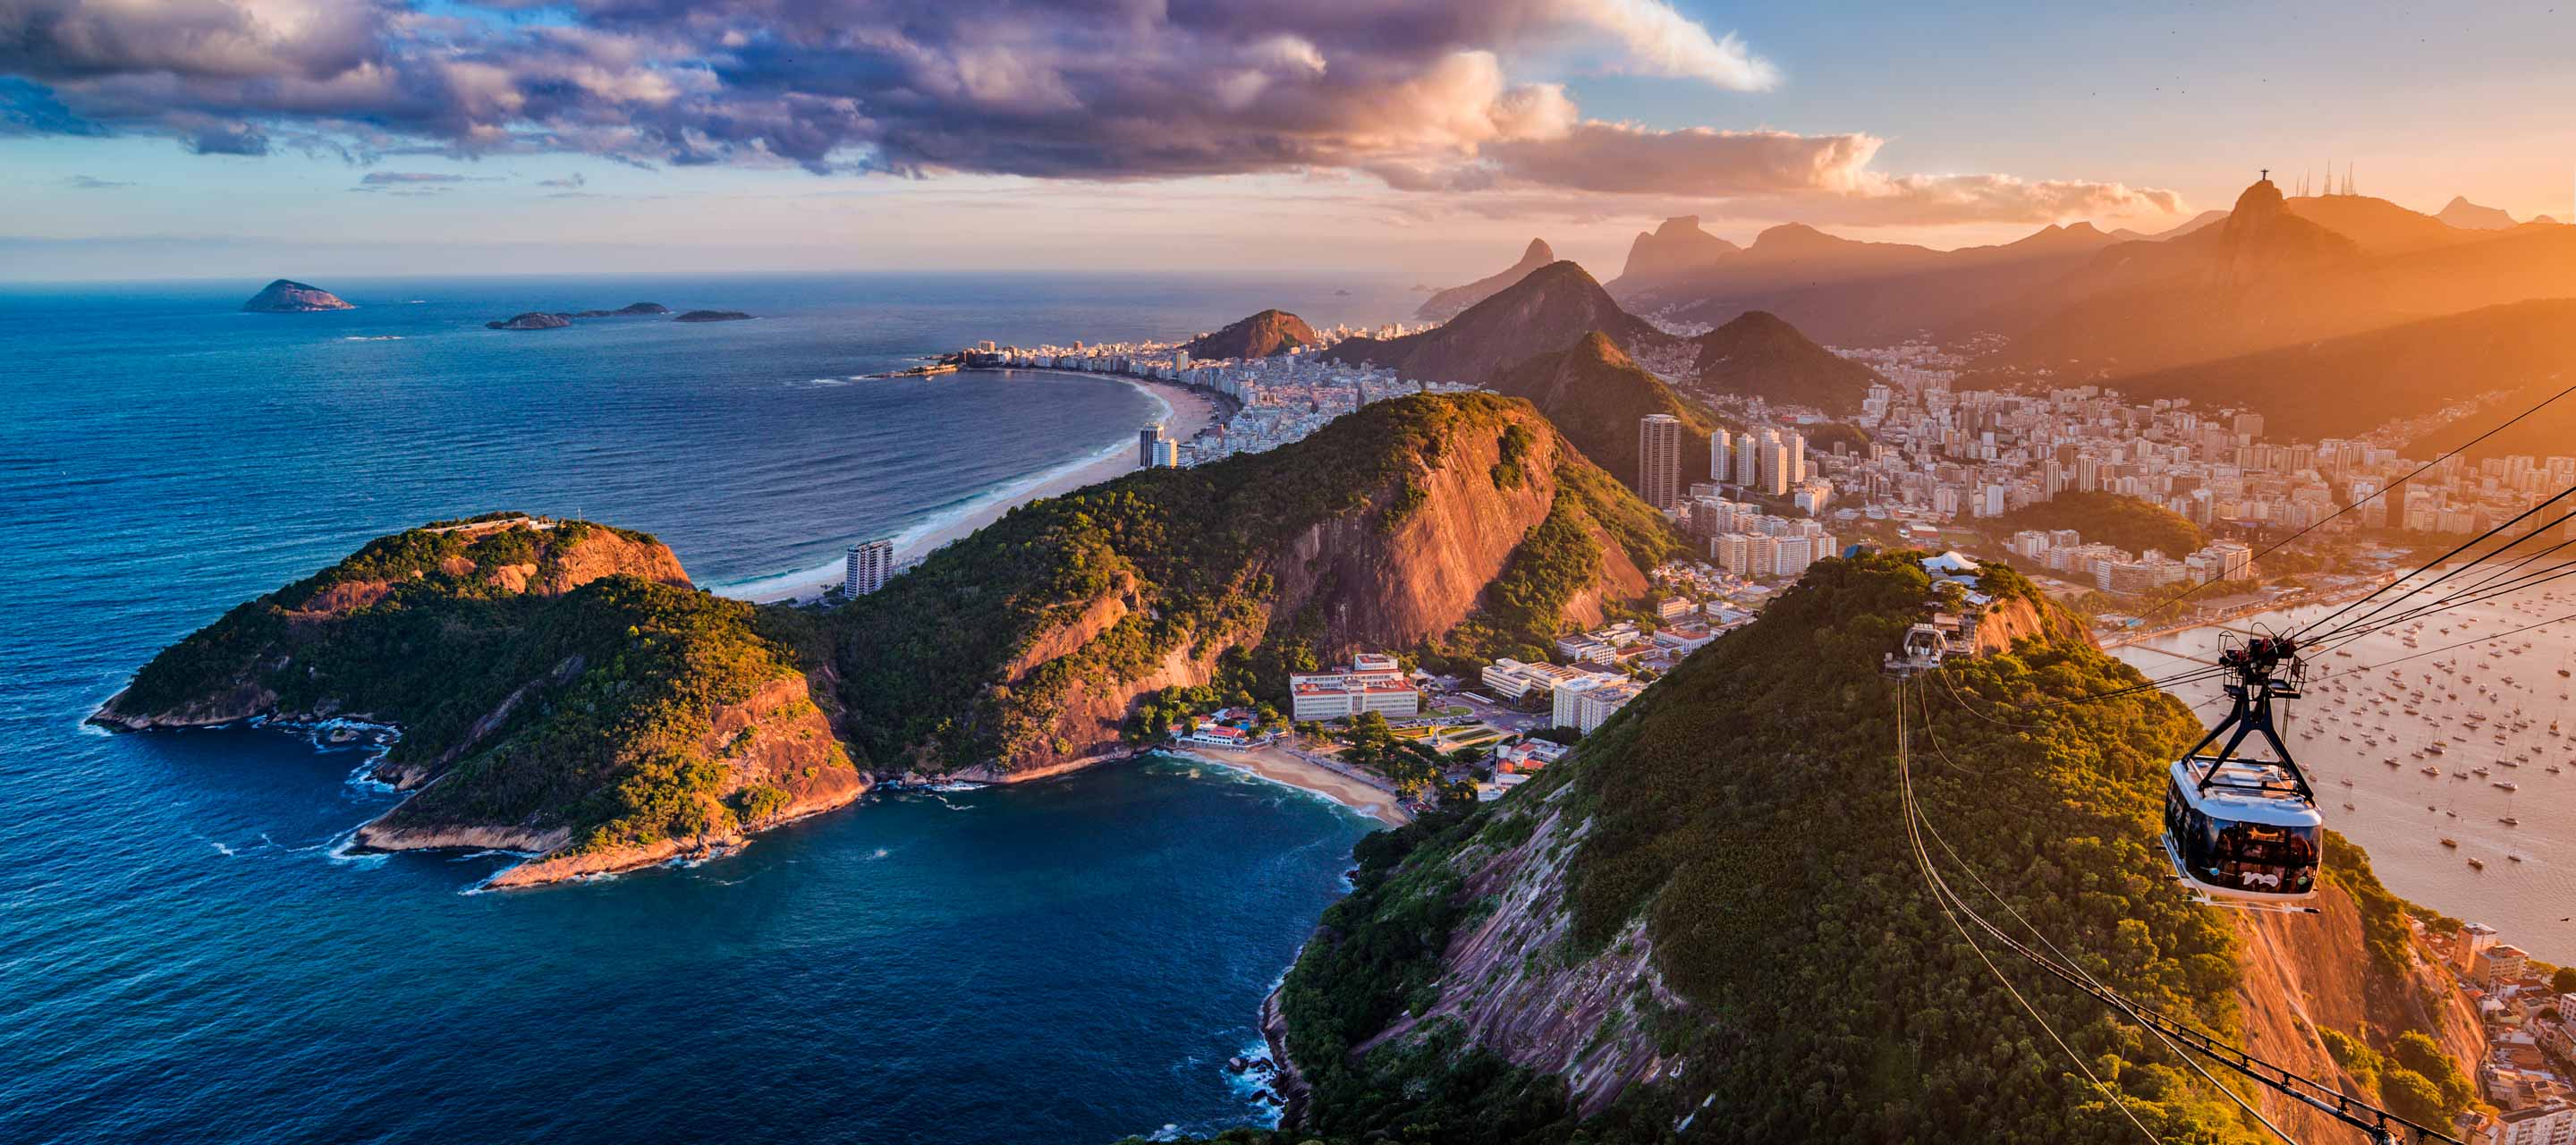 October 1, 2022, Rio de Janeiro, Rio de Janeiro, Brazil: Pedro do